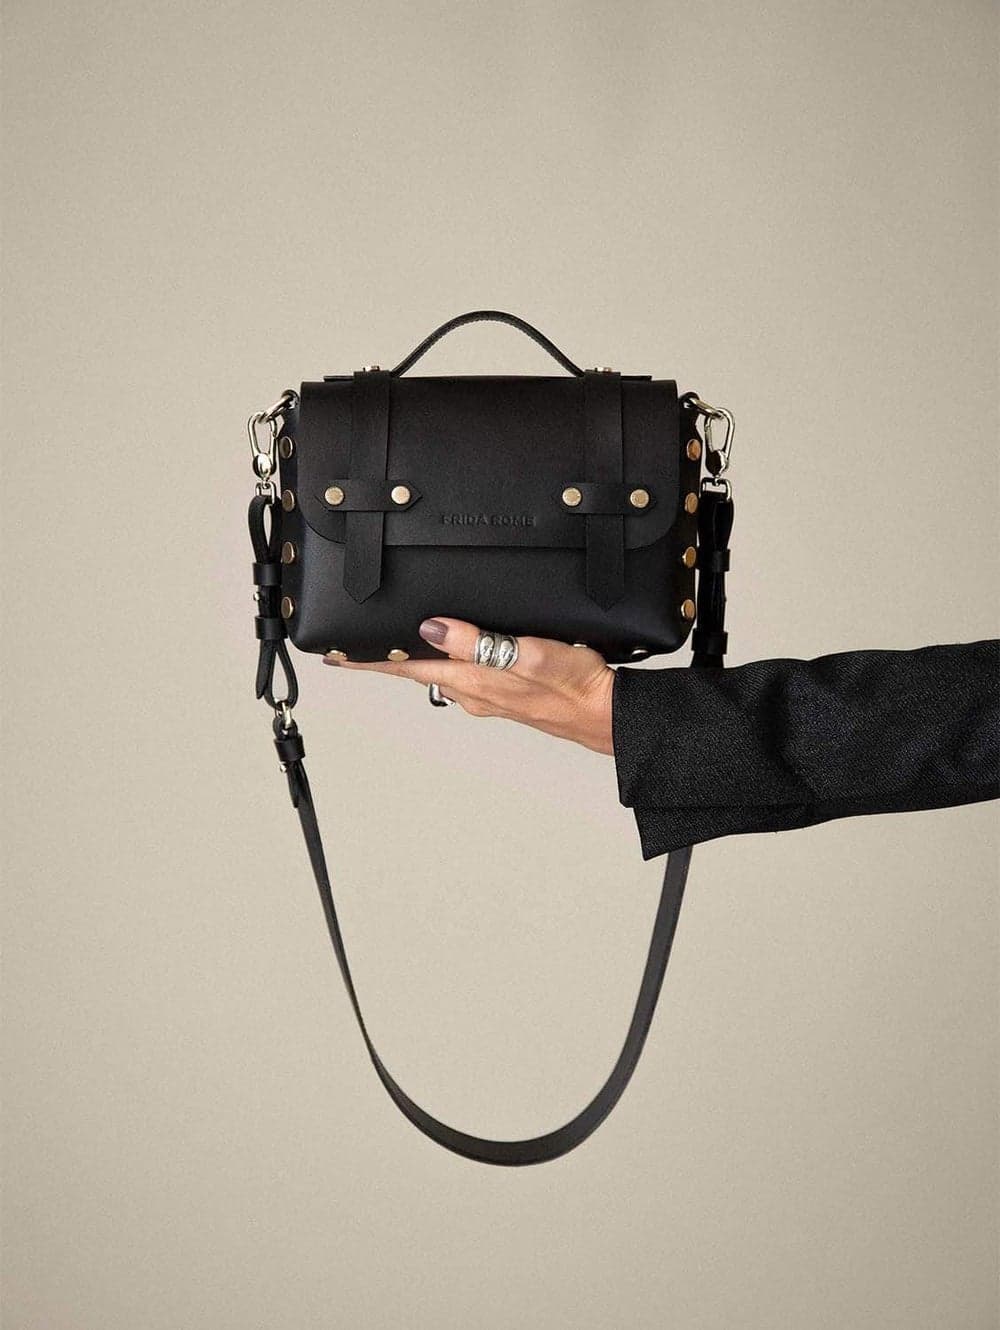 Studded black crossbody bag made from vegan cactus leather